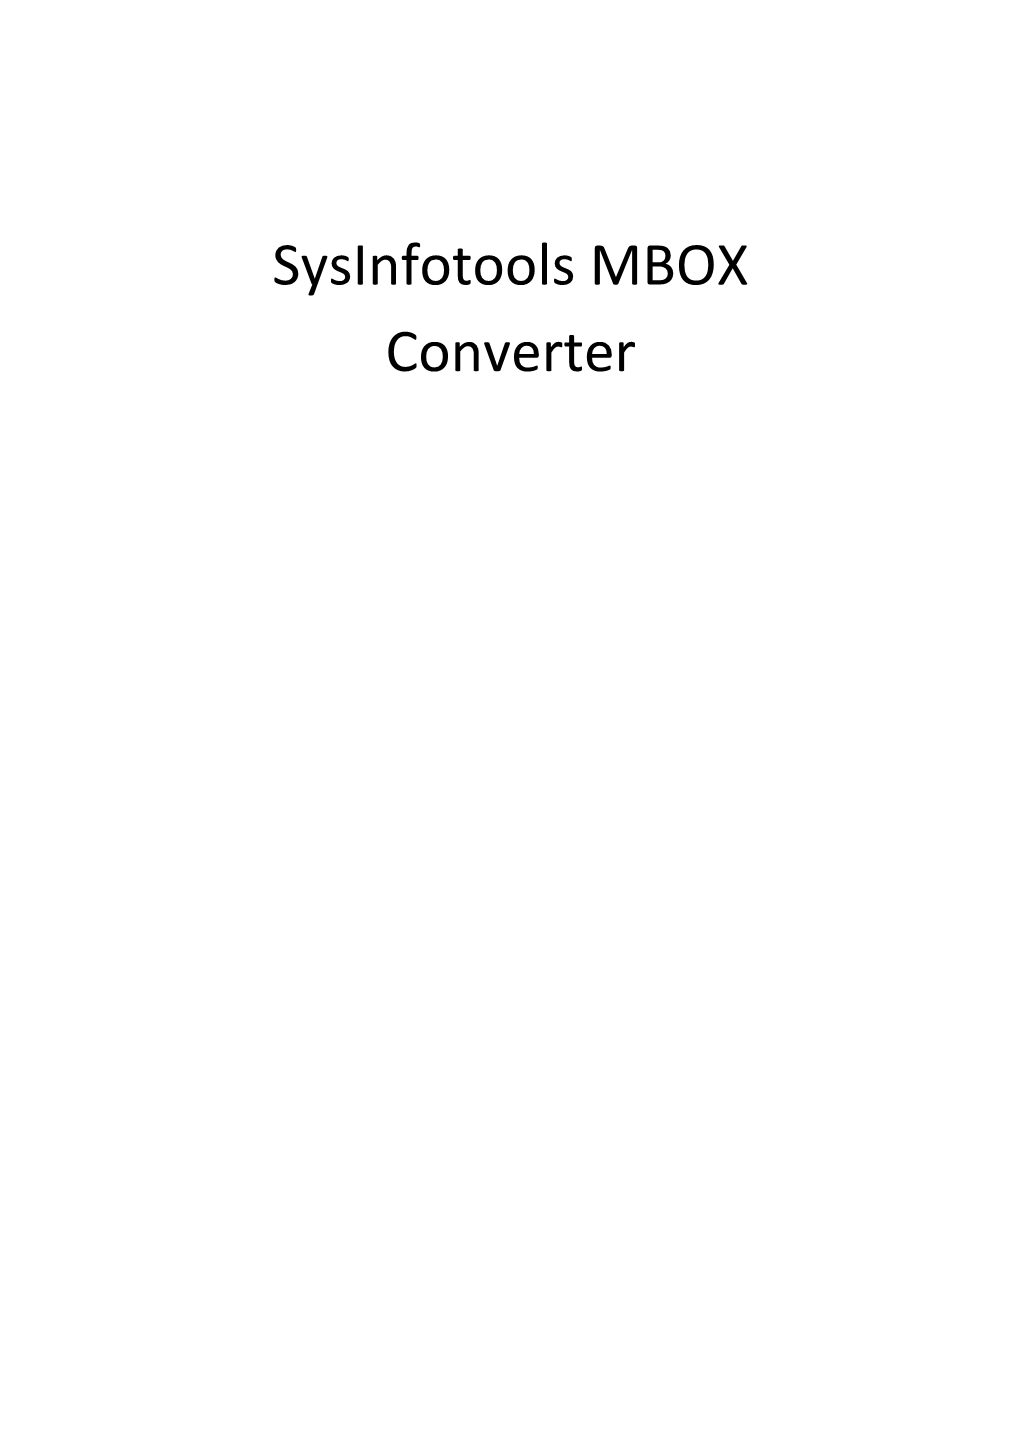 Sysinfotools MBOX Converter